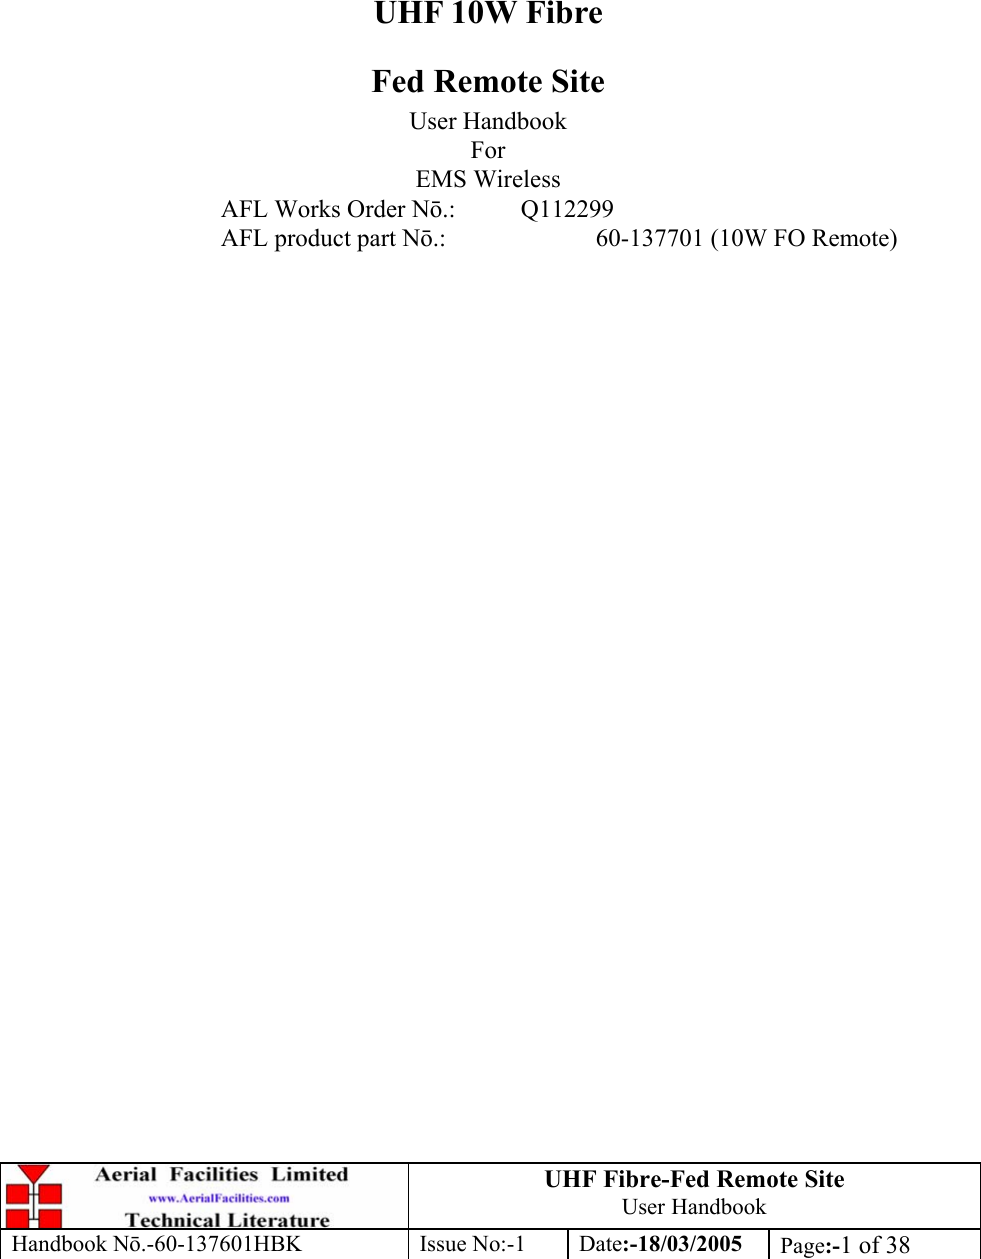 UHF Fibre-Fed Remote Site User Handbook Handbook N.-60-137601HBK Issue No:-1 Date:-18/03/2005  Page:-1 of 38          UHF 10W Fibre Fed Remote Site User Handbook For EMS Wireless AFL Works Order N.: Q112299 AFL product part N.:    60-137701 (10W FO Remote) 